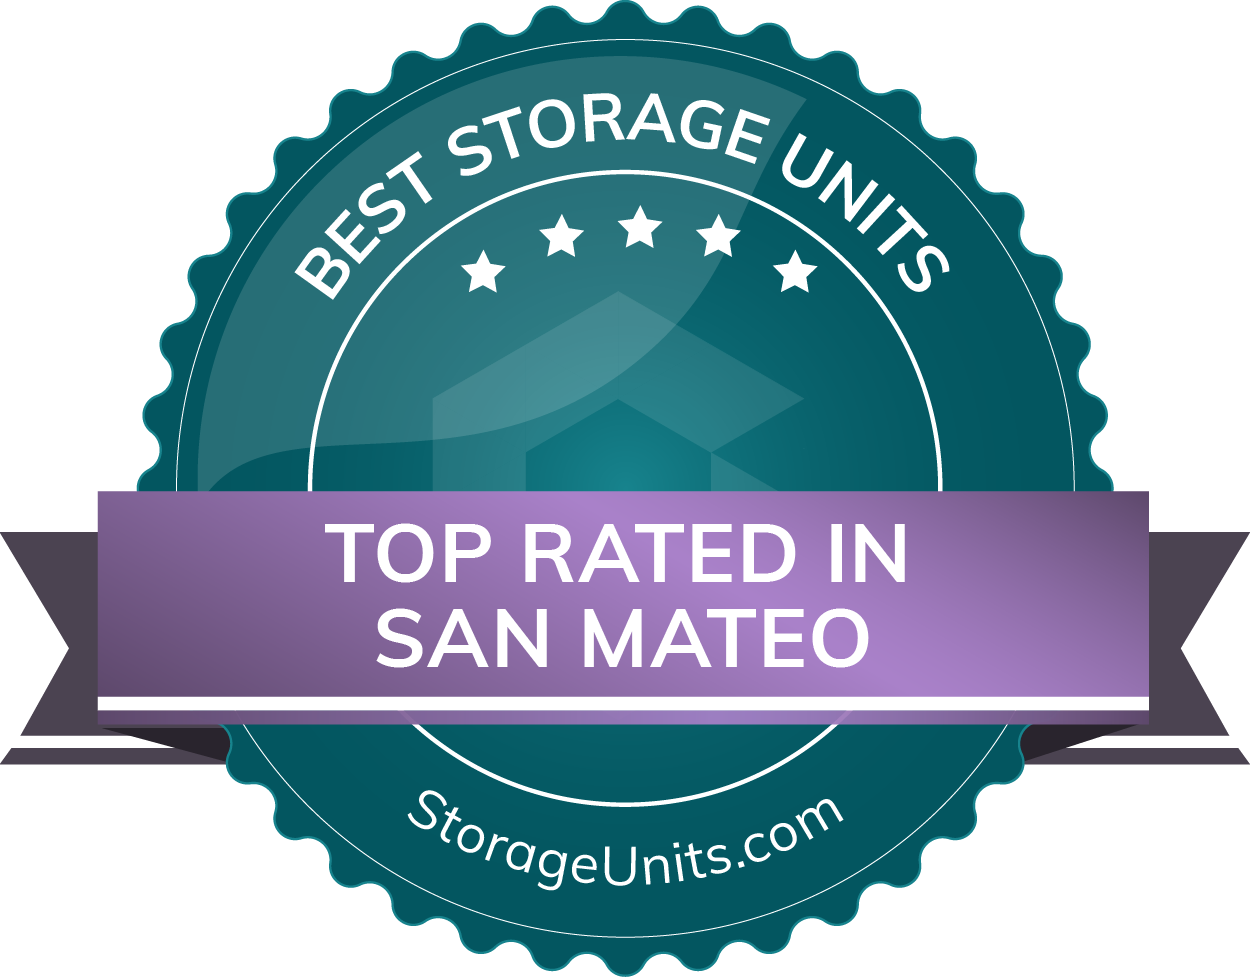 Best Self Storage Units in San Mateo, California of 2022